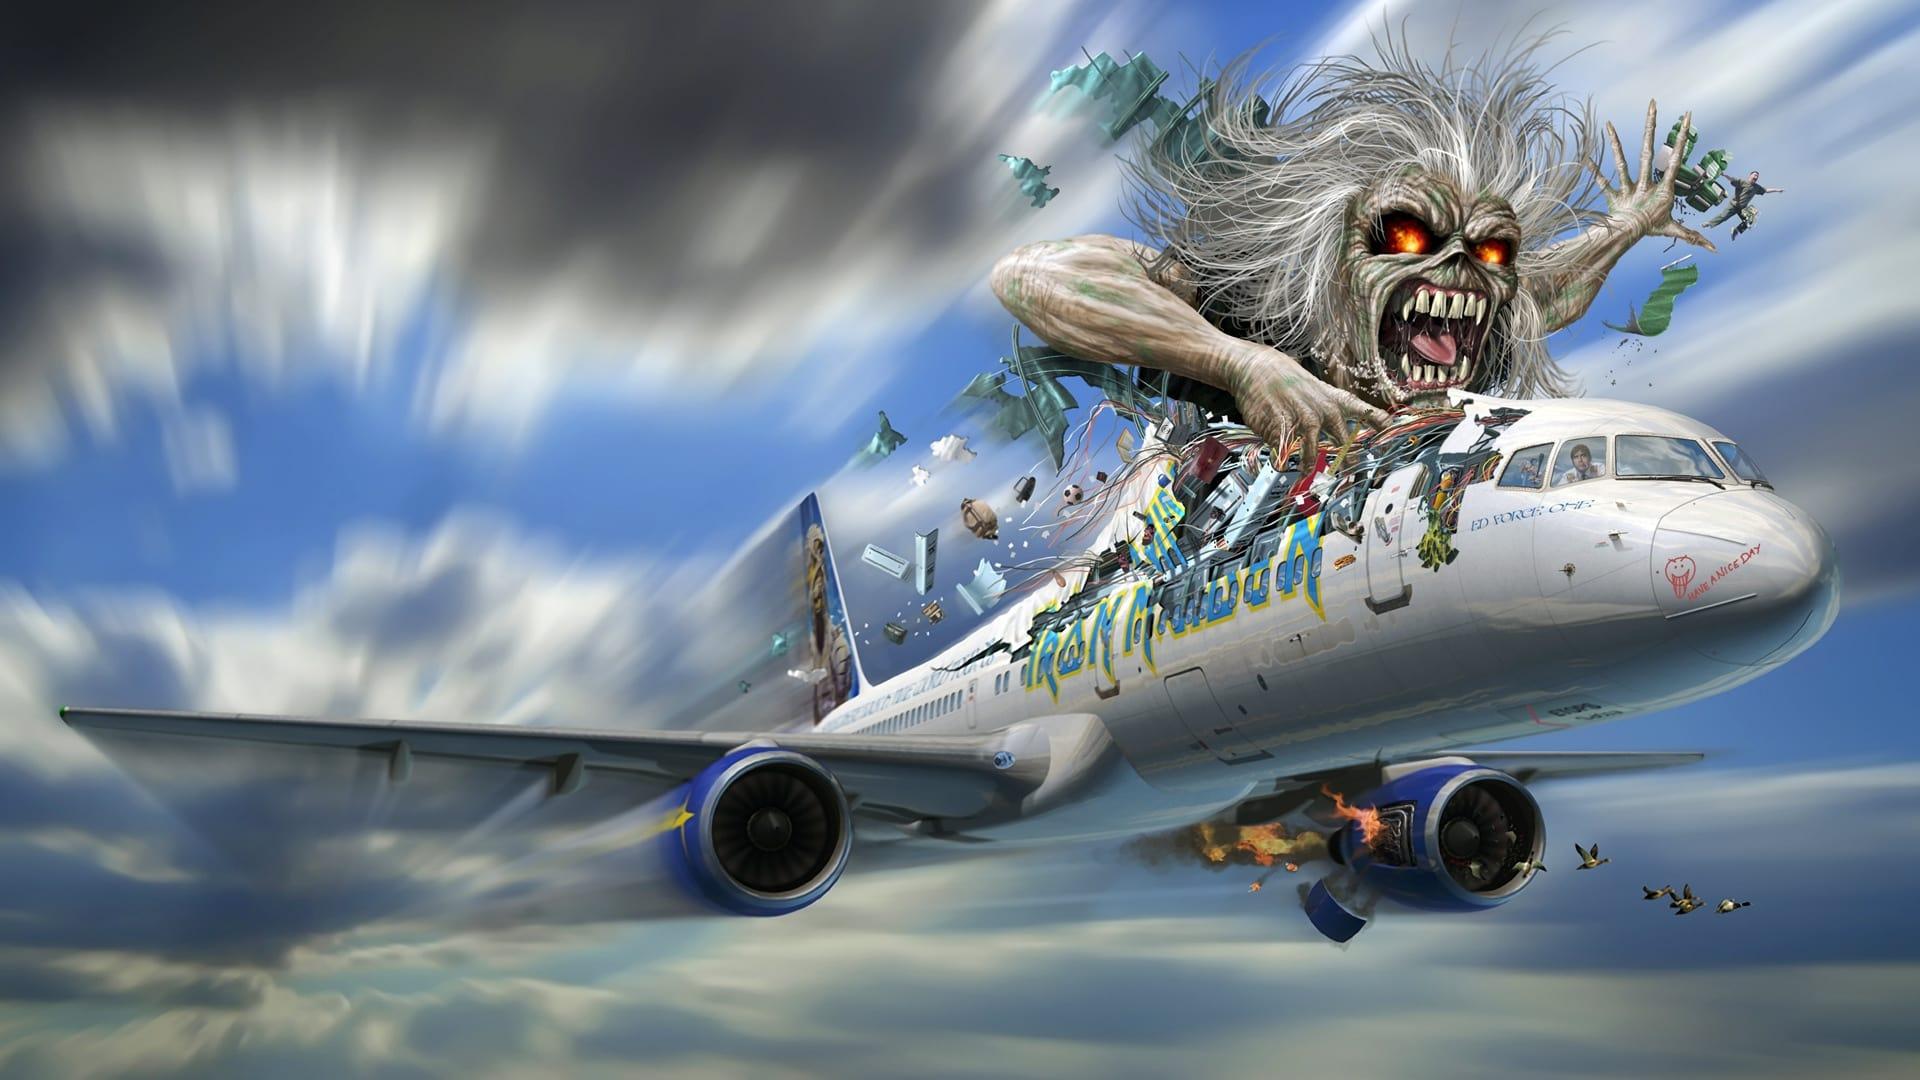 Iron Maiden: Flight 666 - The Concert backdrop